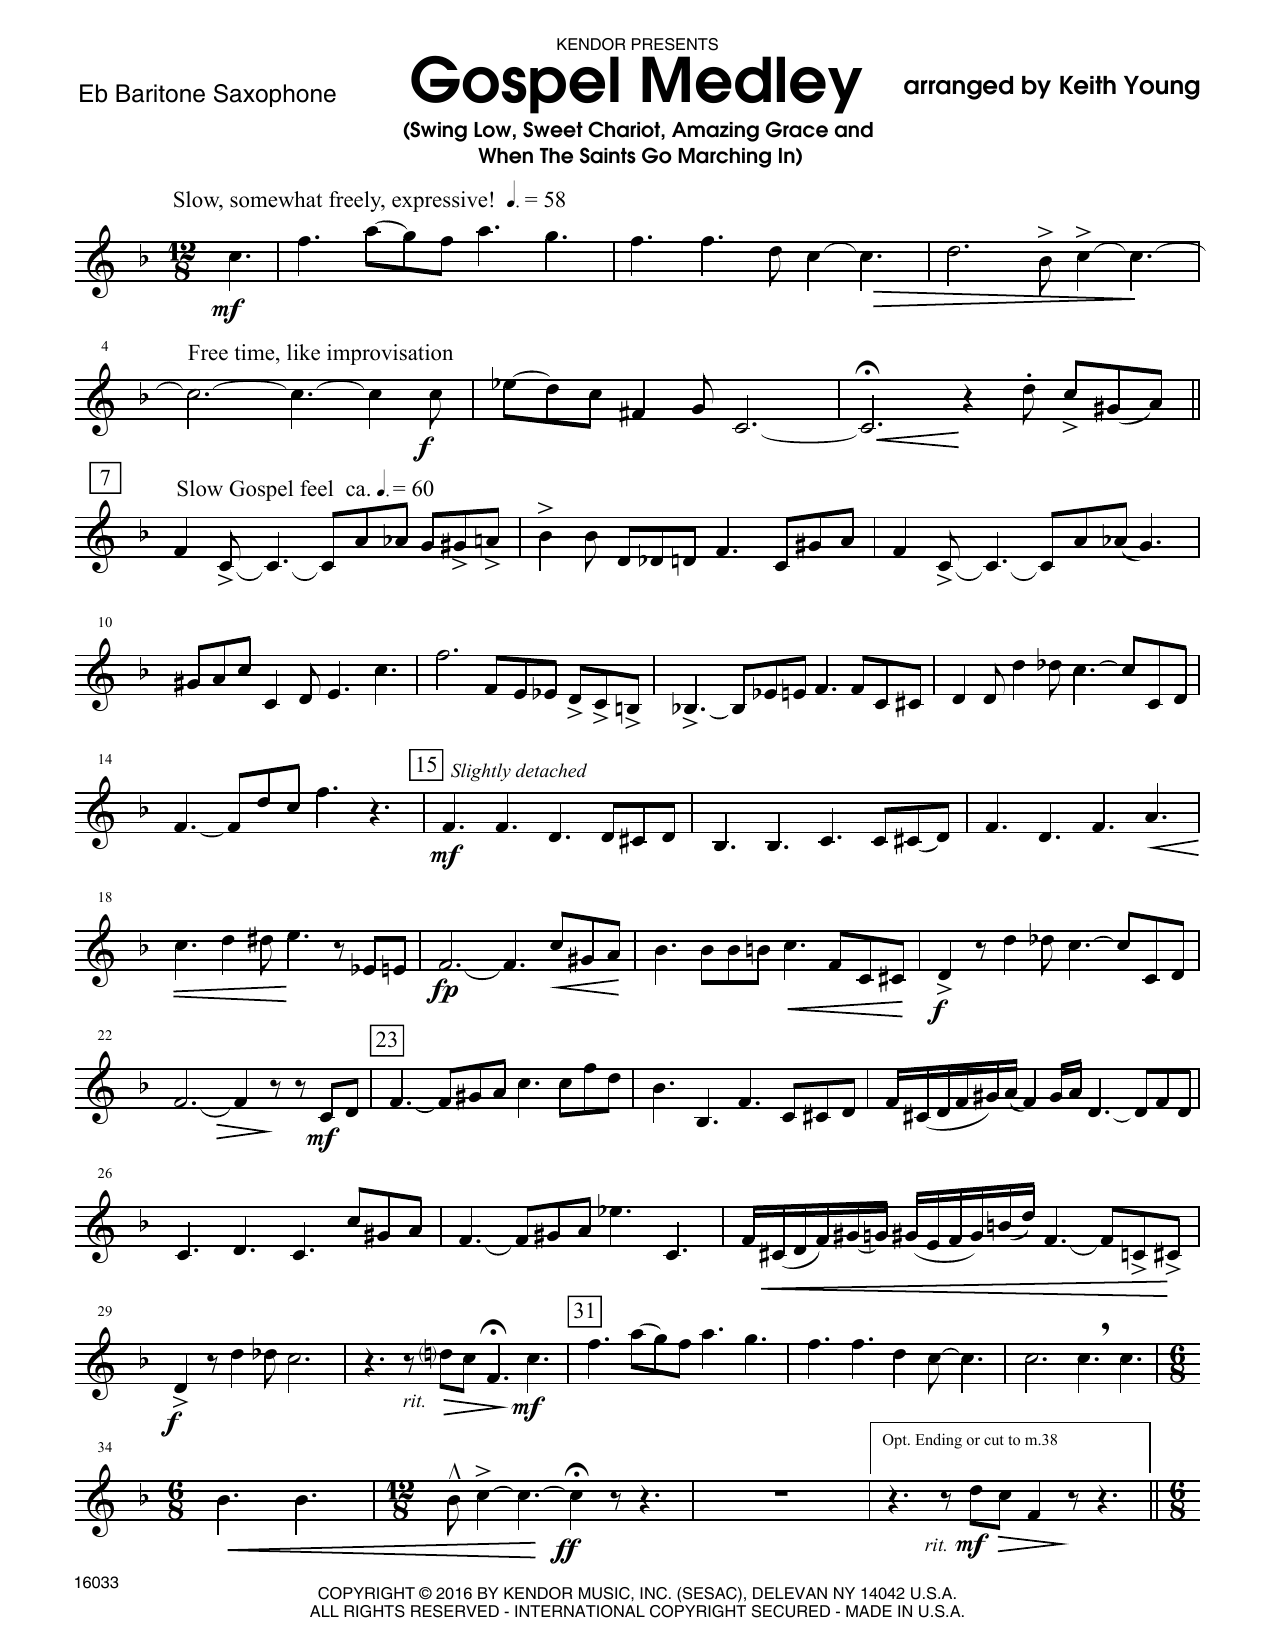 Download Keith Young Gospel Medley - Eb Baritone Saxophone Sheet Music